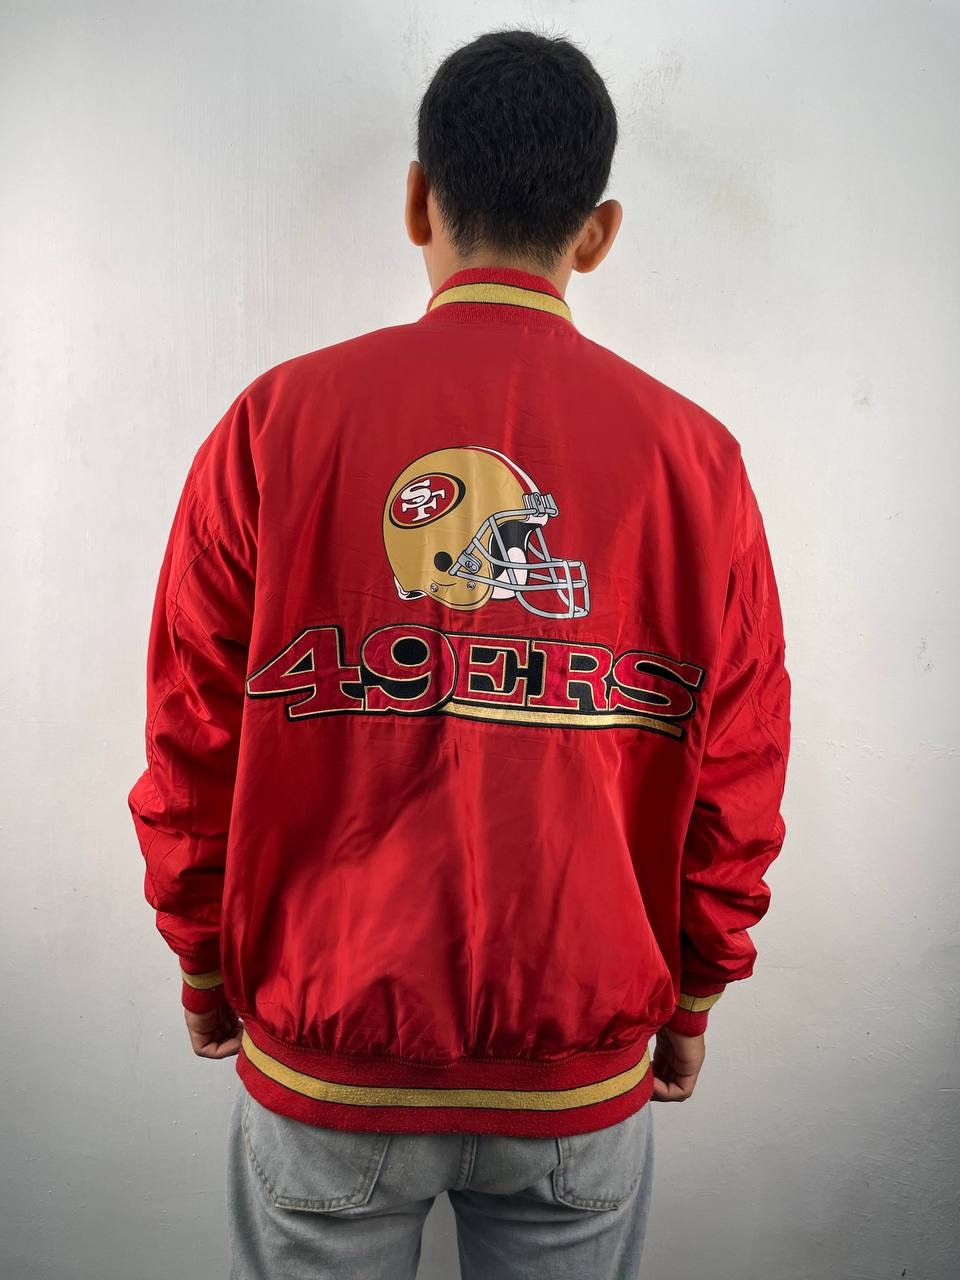 Vintage 49ers Jacket - Etsy Canada